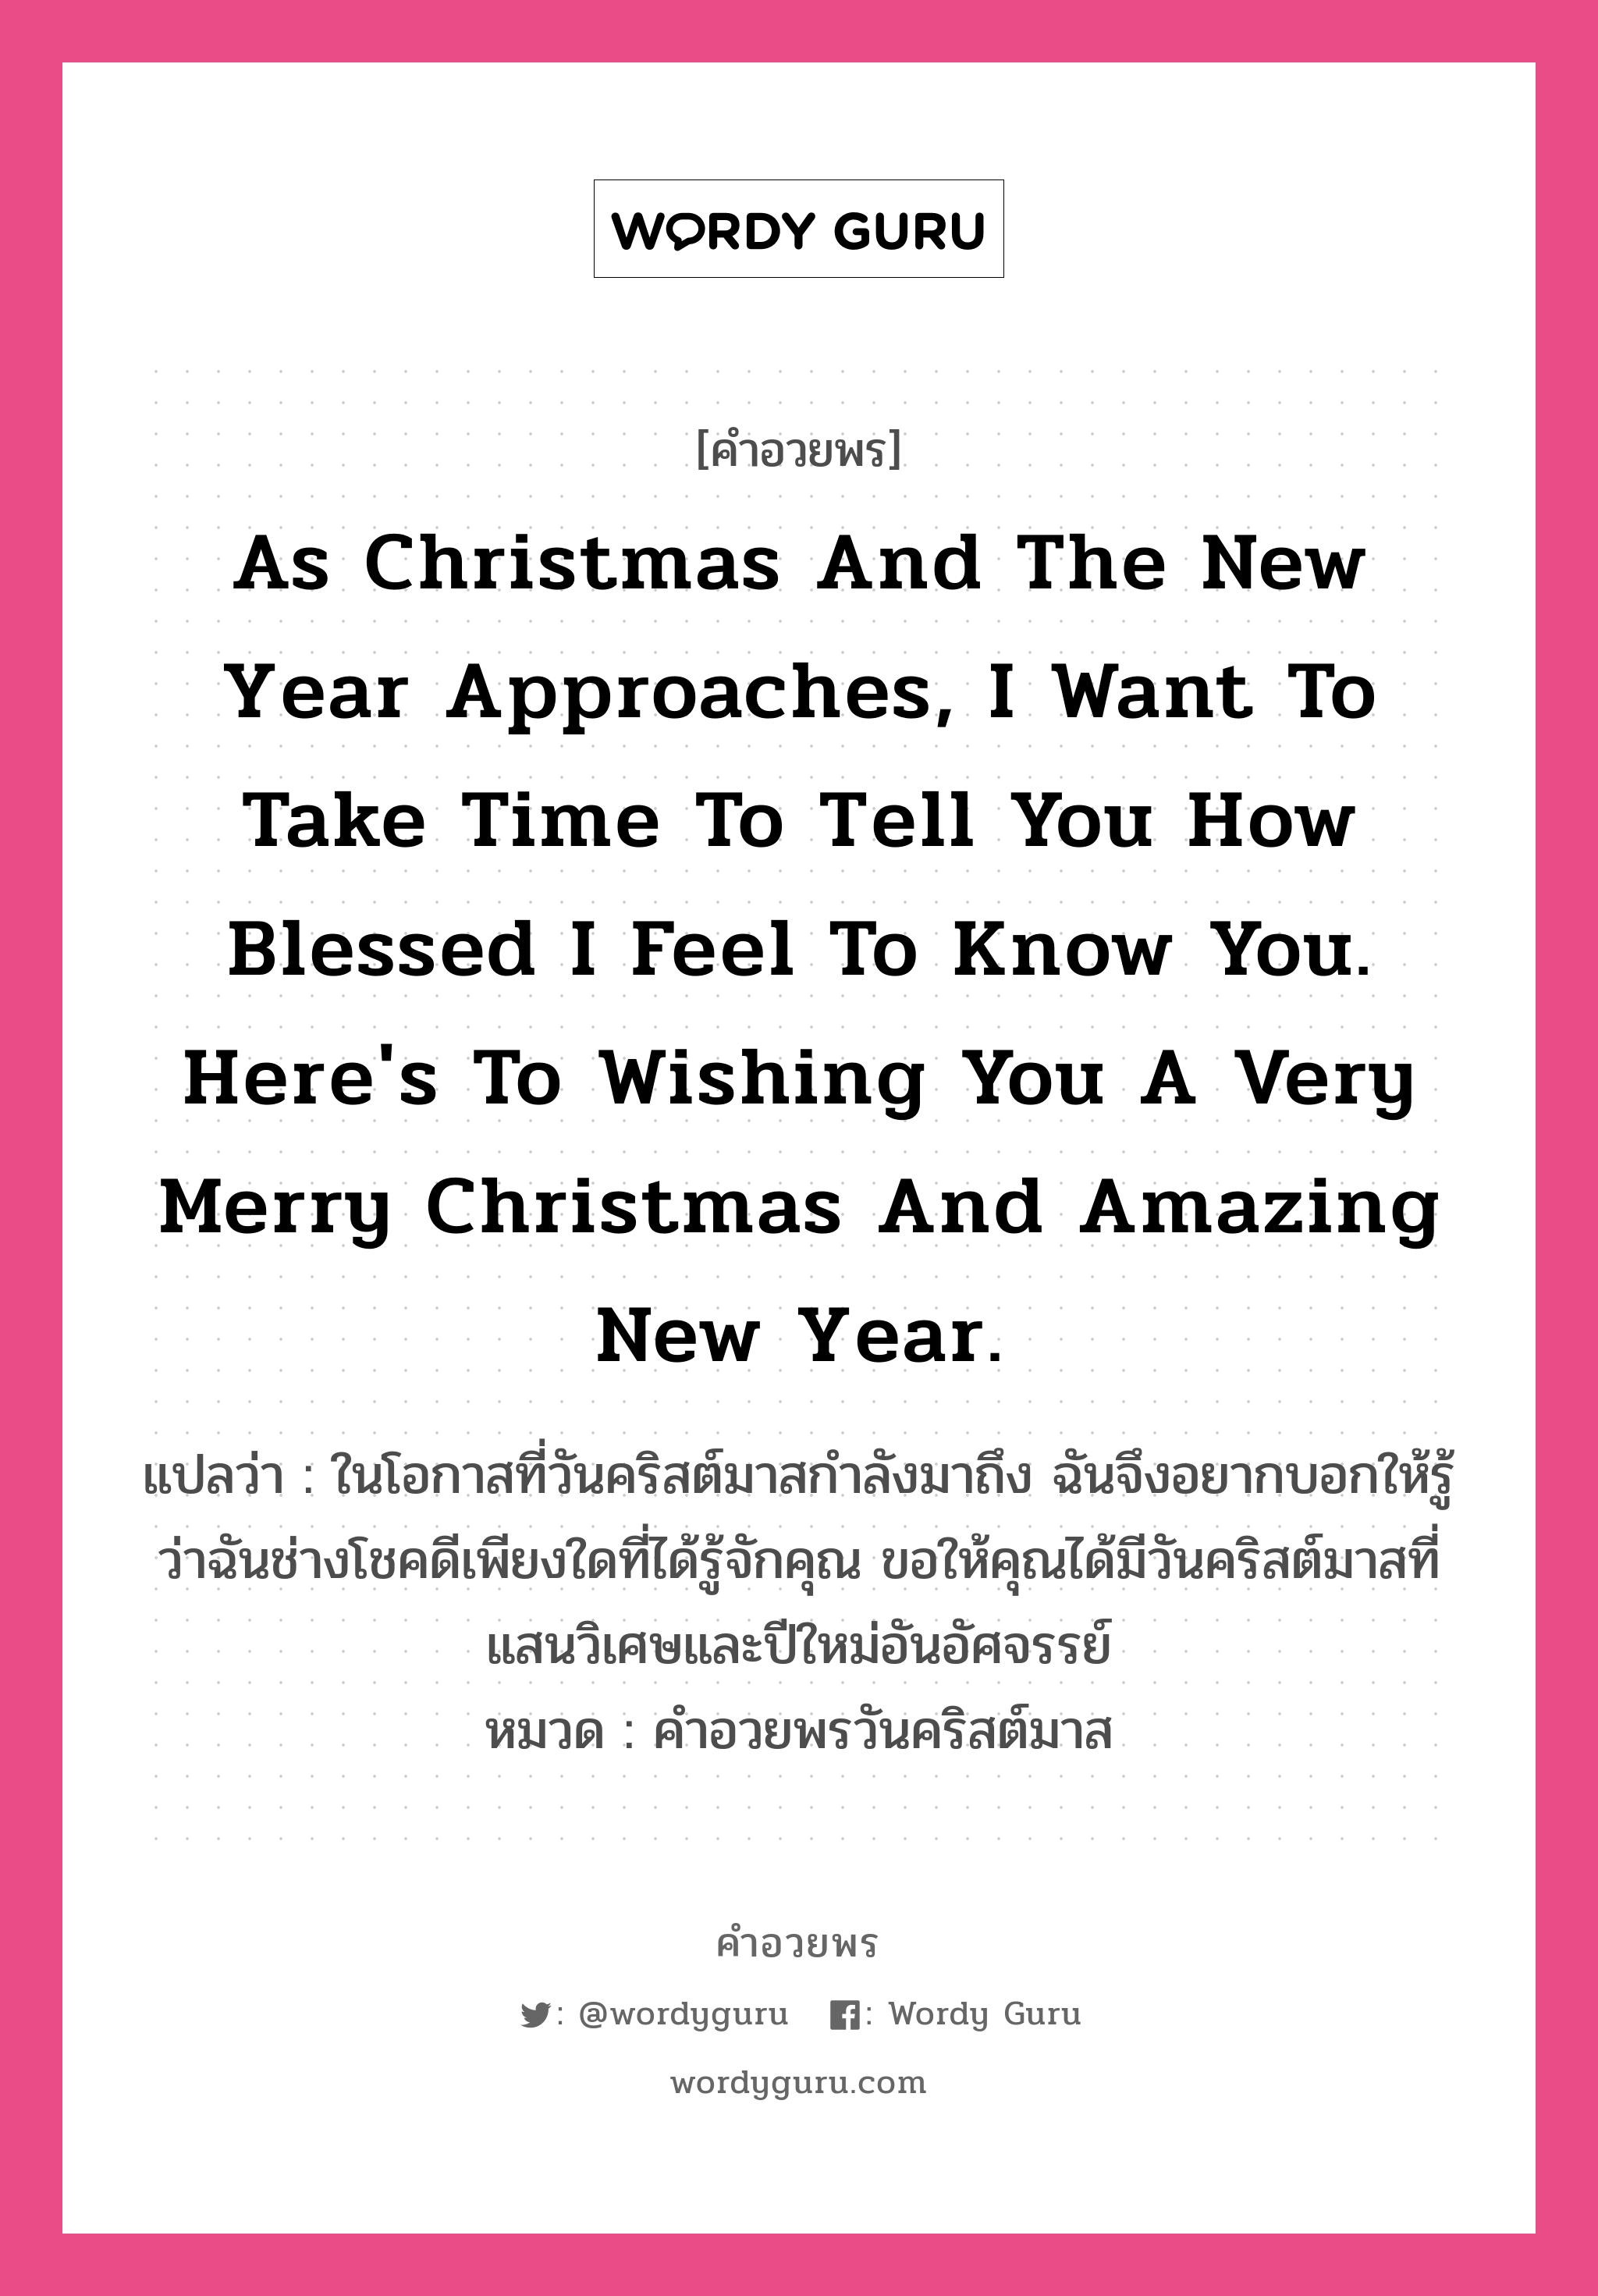 As Christmas and the New Year approaches, I want to take time to tell you how blessed I feel to know you. Here's to wishing you a very Merry Christmas and amazing New Year. คำศัพท์ในกลุ่มประเภท คำอวยพรวันคริสต์มาส, แปลว่า ในโอกาสที่วันคริสต์มาสกำลังมาถึง ฉันจึงอยากบอกให้รู้ว่าฉันช่างโชคดีเพียงใดที่ได้รู้จักคุณ ขอให้คุณได้มีวันคริสต์มาสที่แสนวิเศษและปีใหม่อันอัศจรรย์ หมวด คำอวยพรวันคริสต์มาส หมวด คำอวยพรวันคริสต์มาส